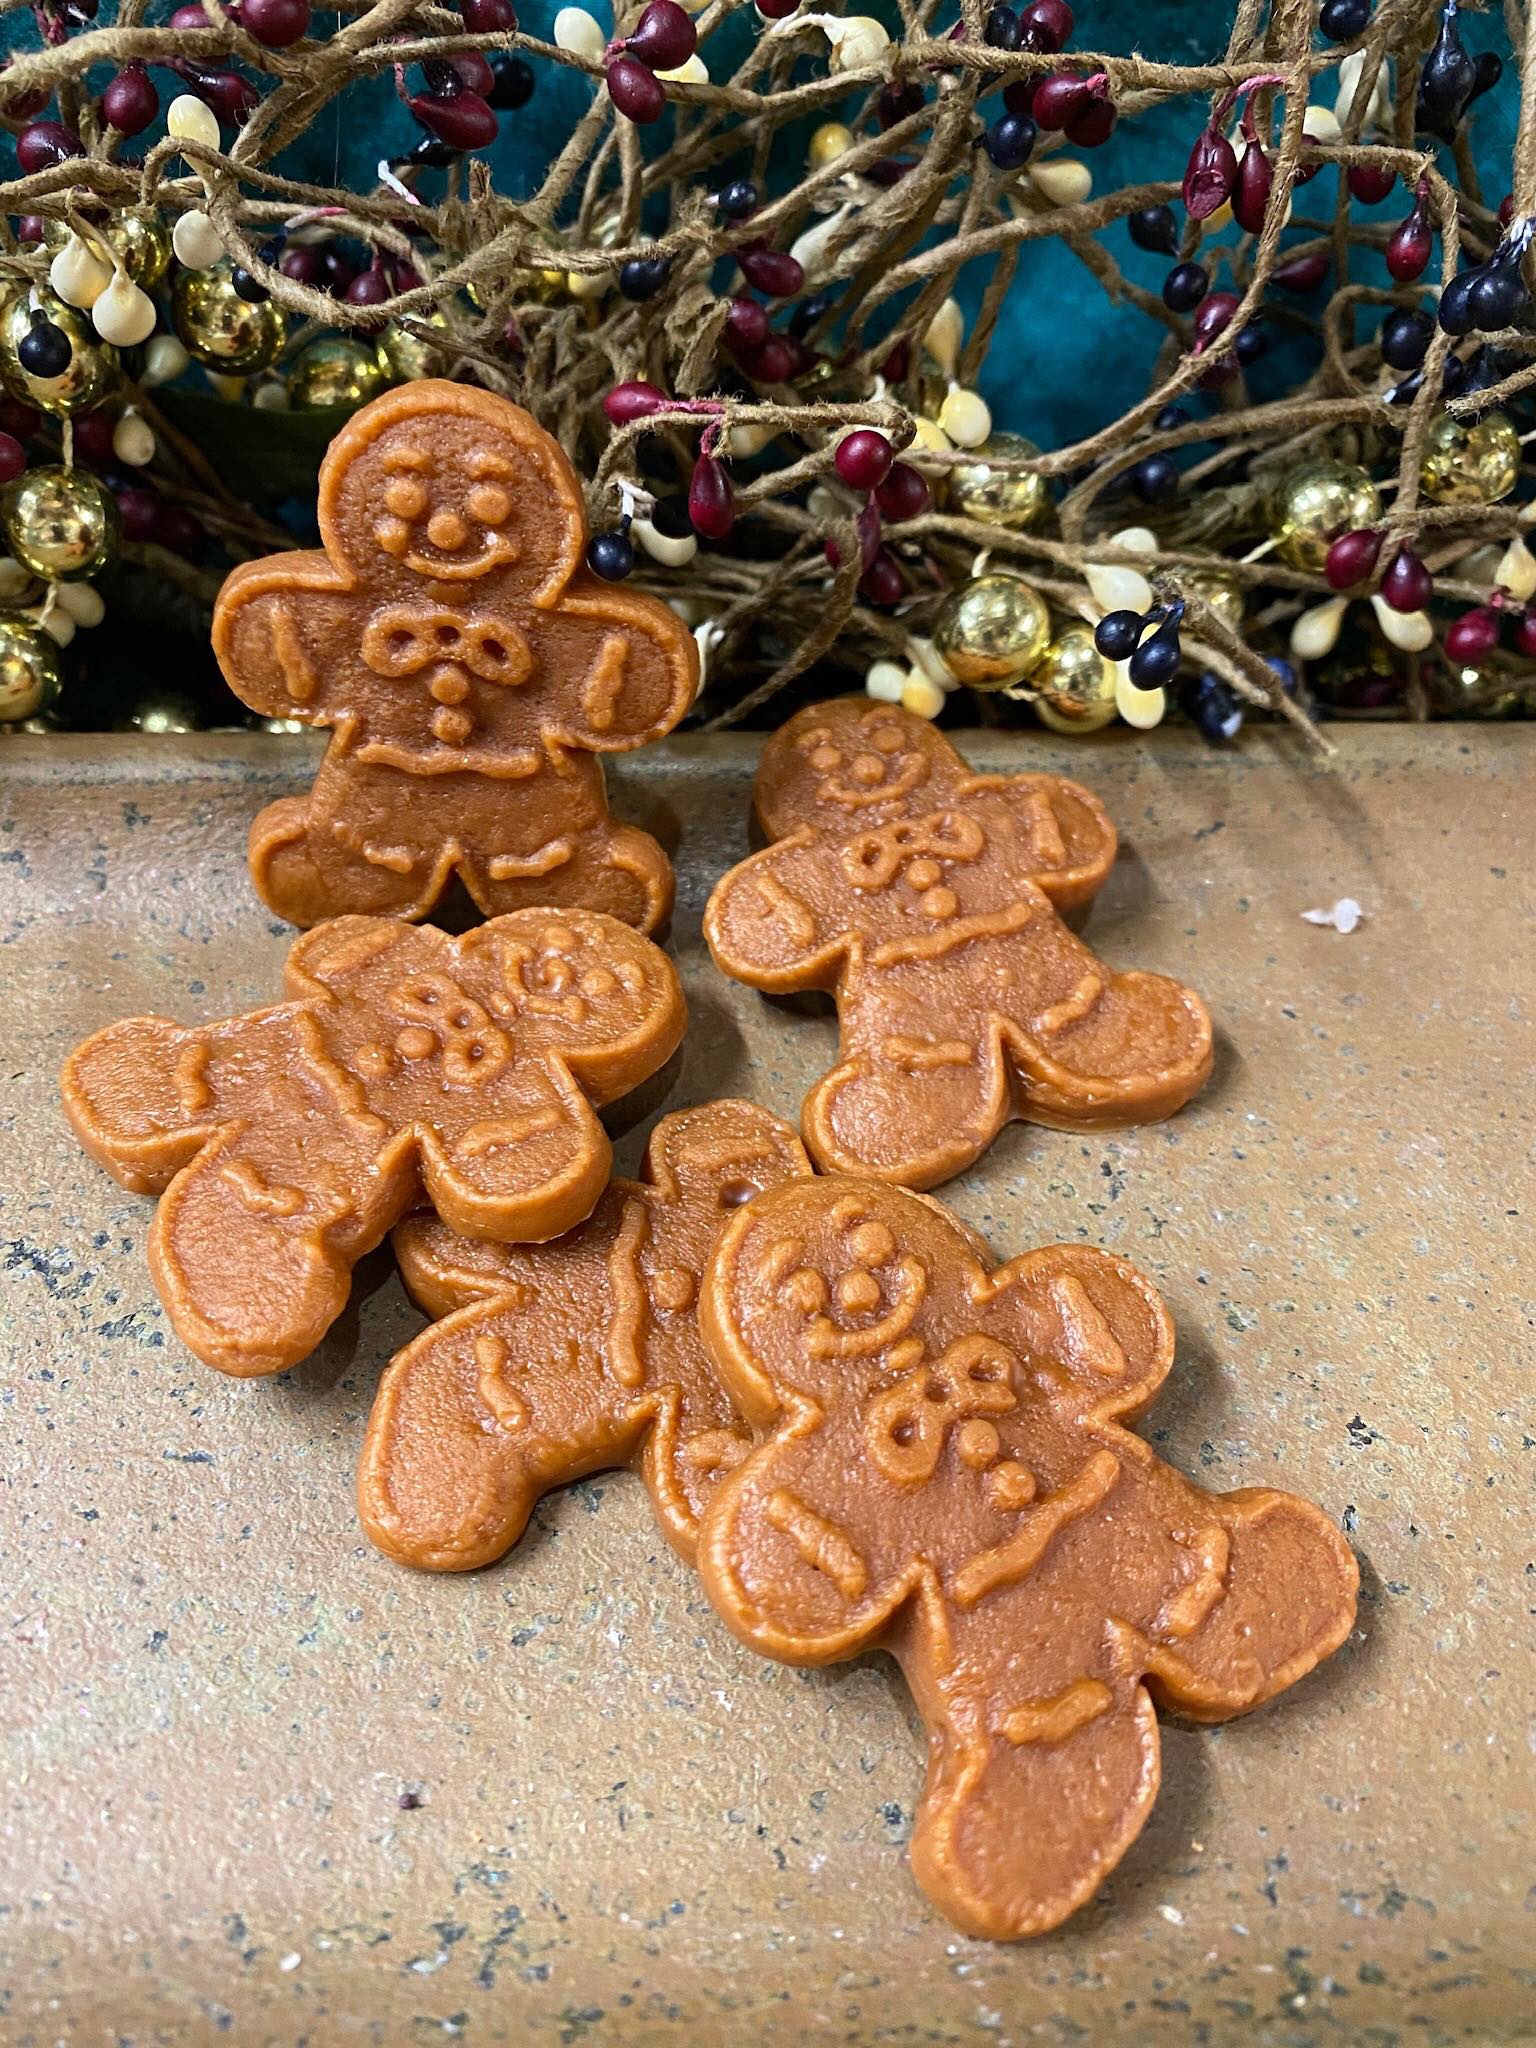 https://www.vanyulay.com/wp-content/uploads/2021/02/Gingerbread-Man.jpg